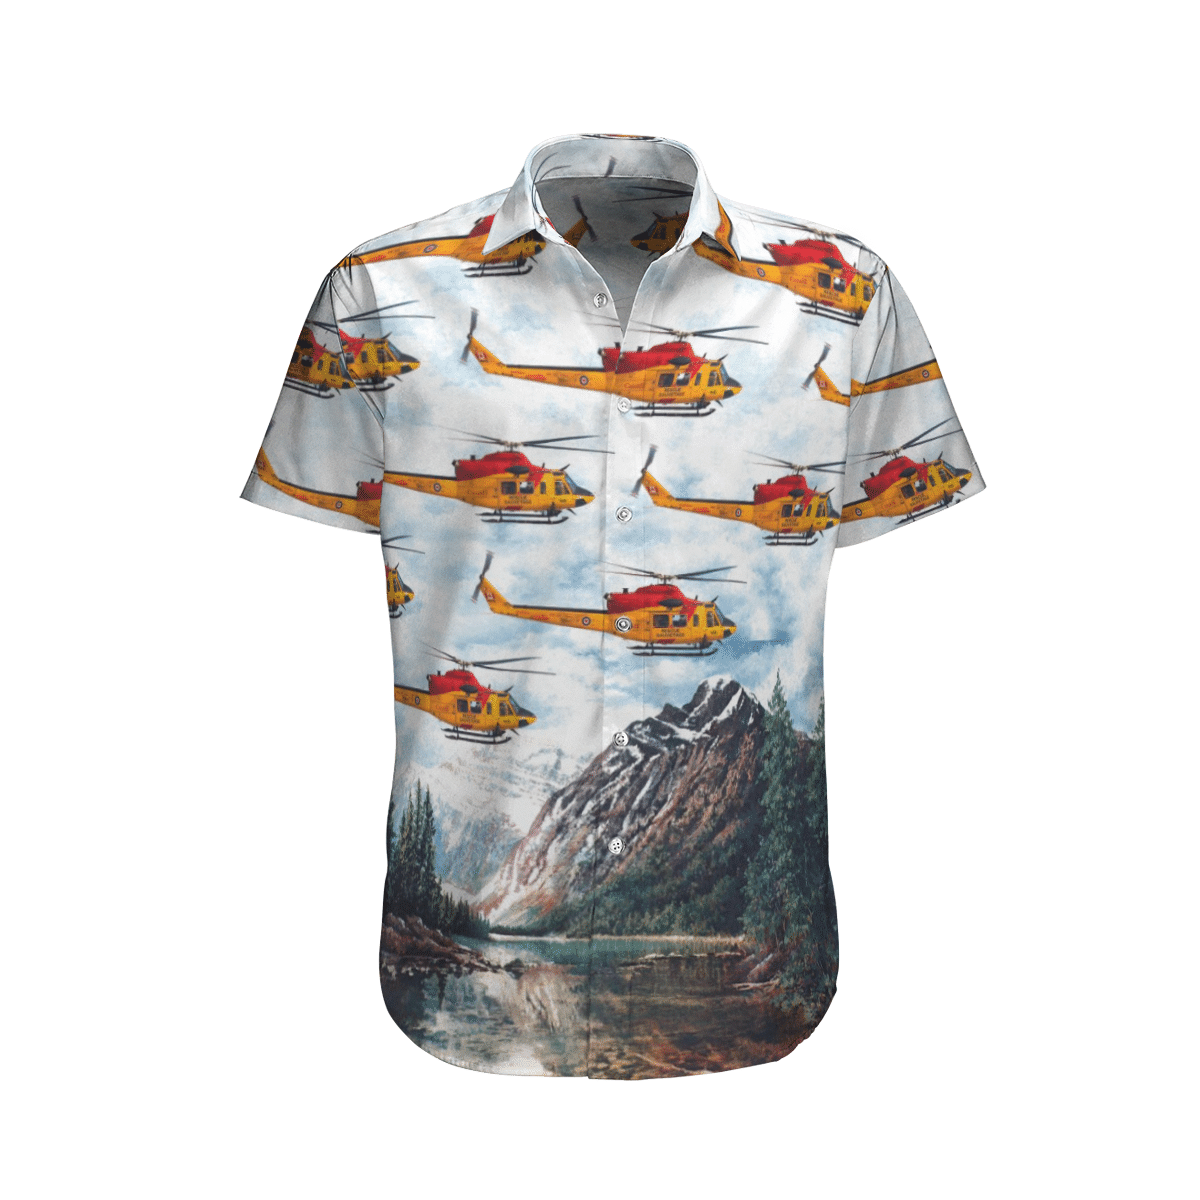 Get a new Hawaiian shirt to enjoy summer vacation 133